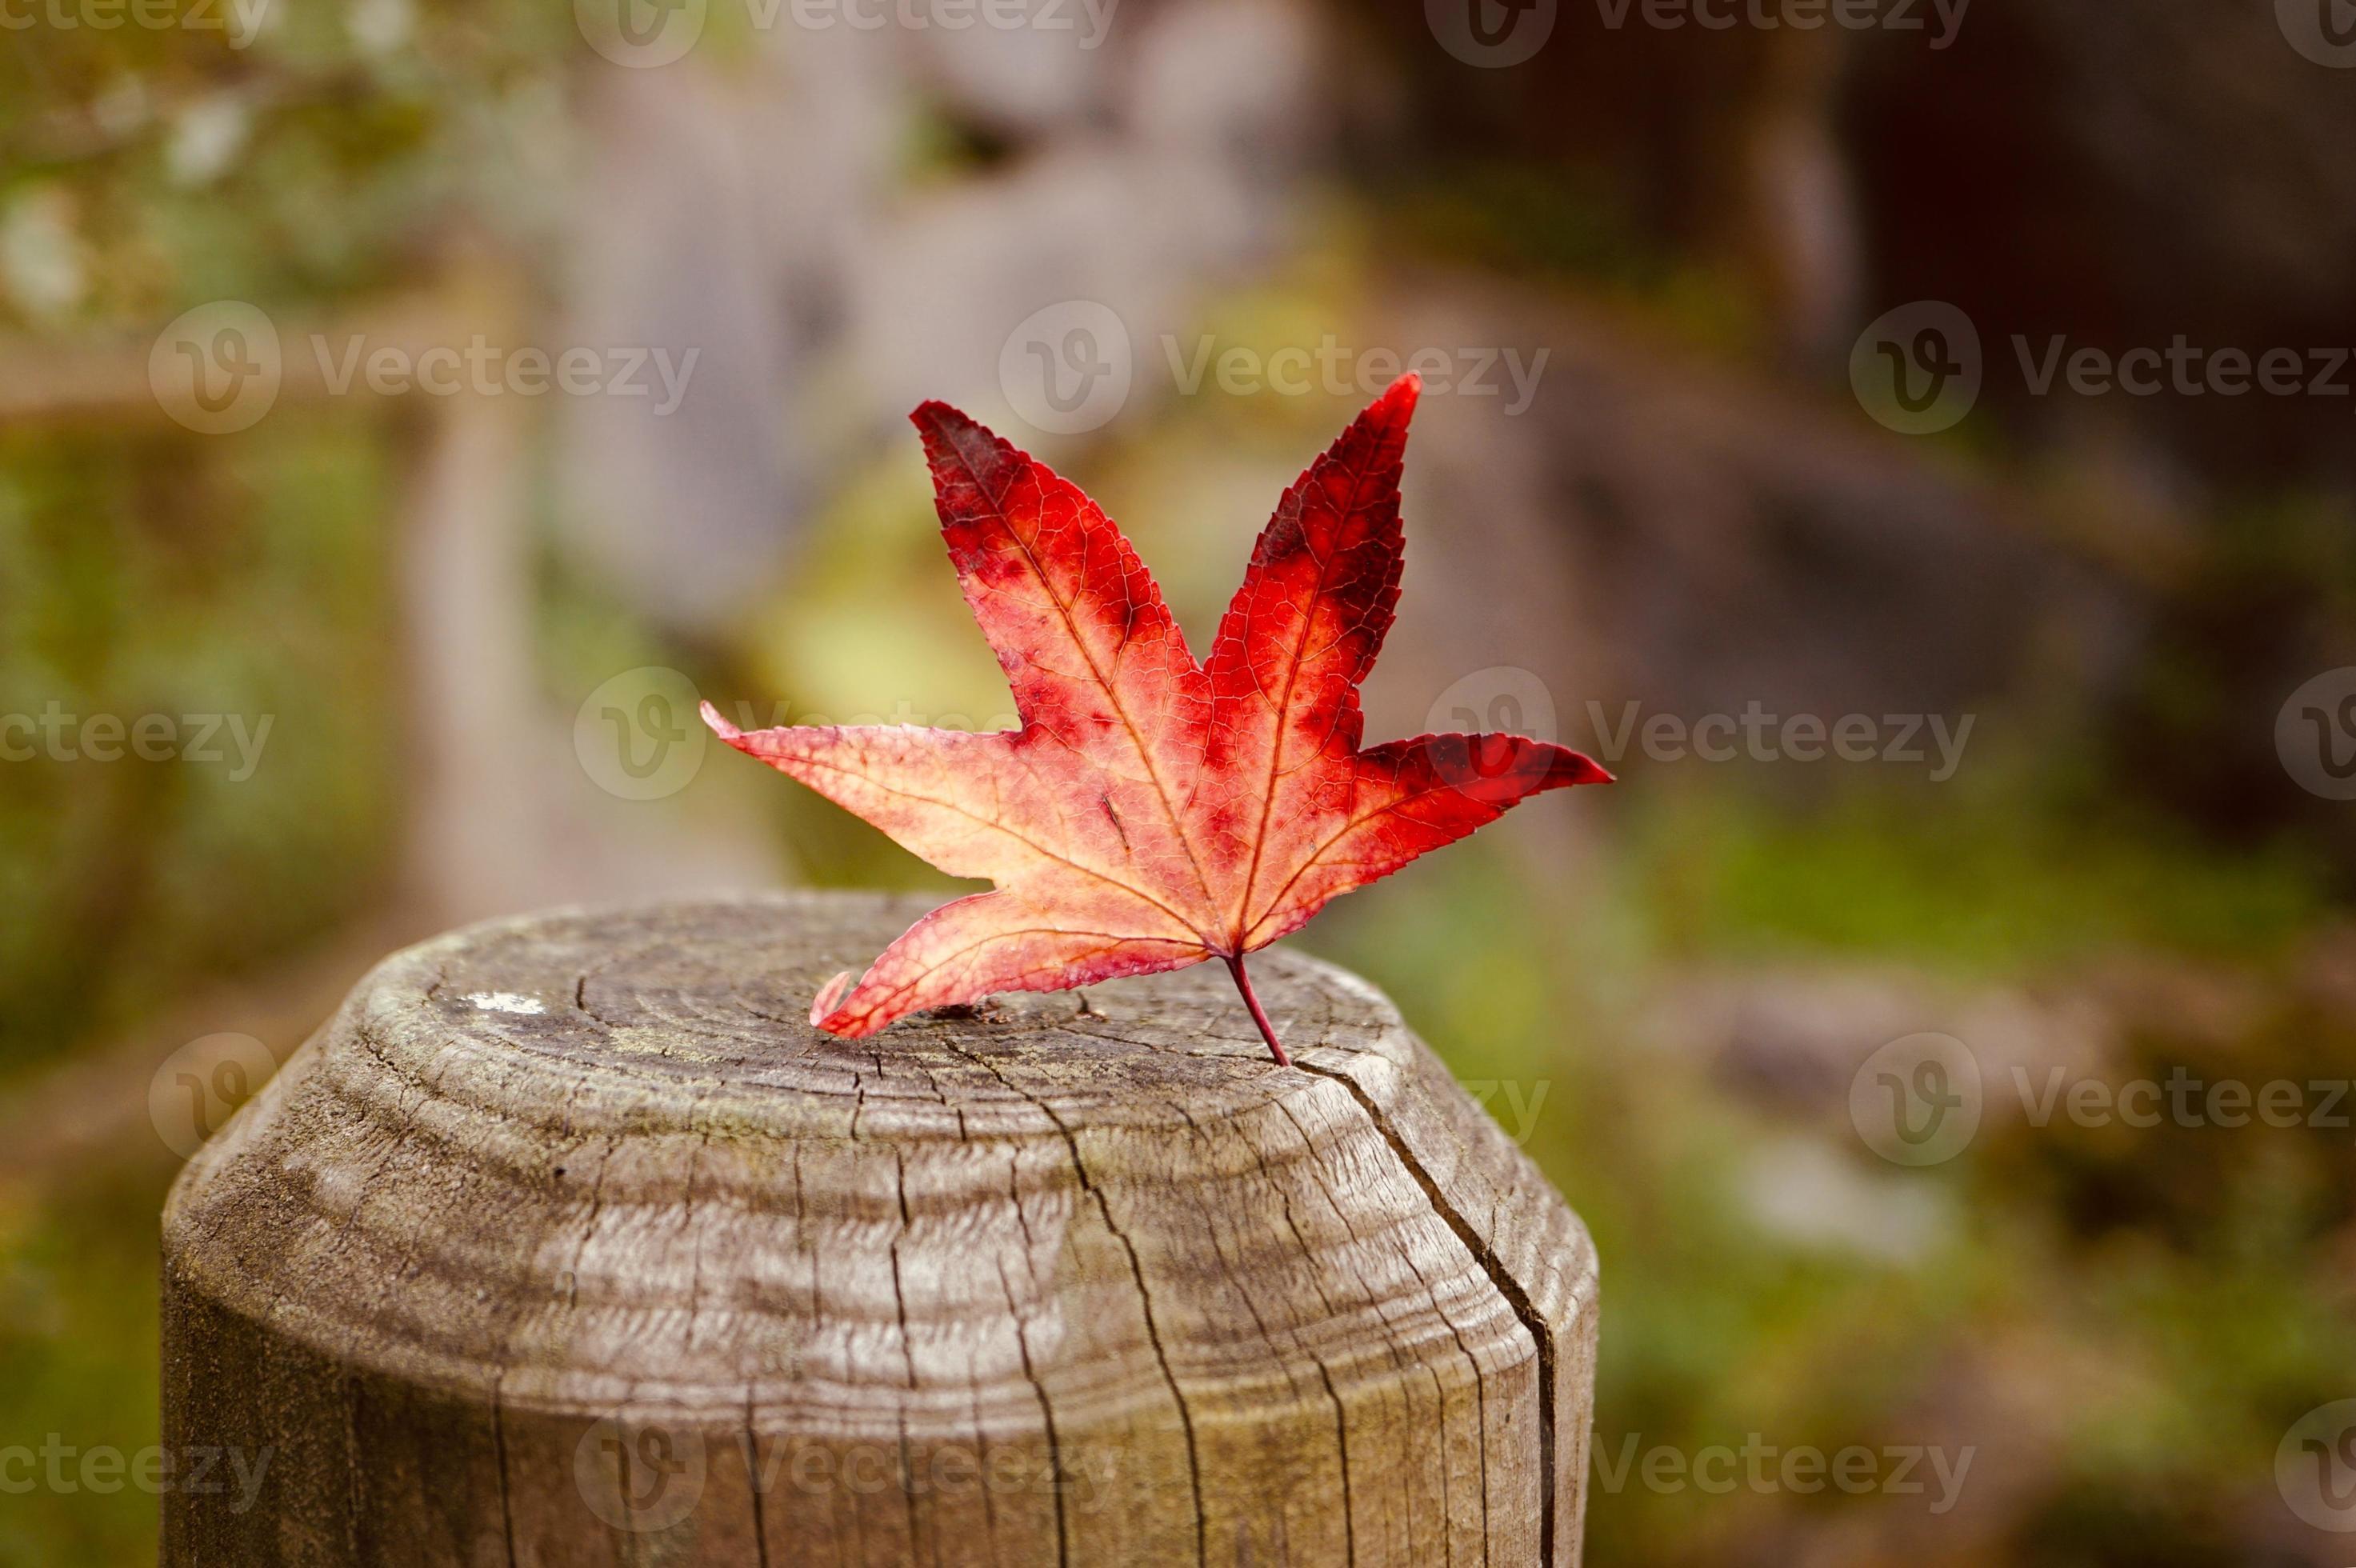 red maple leaf in autumn season photo